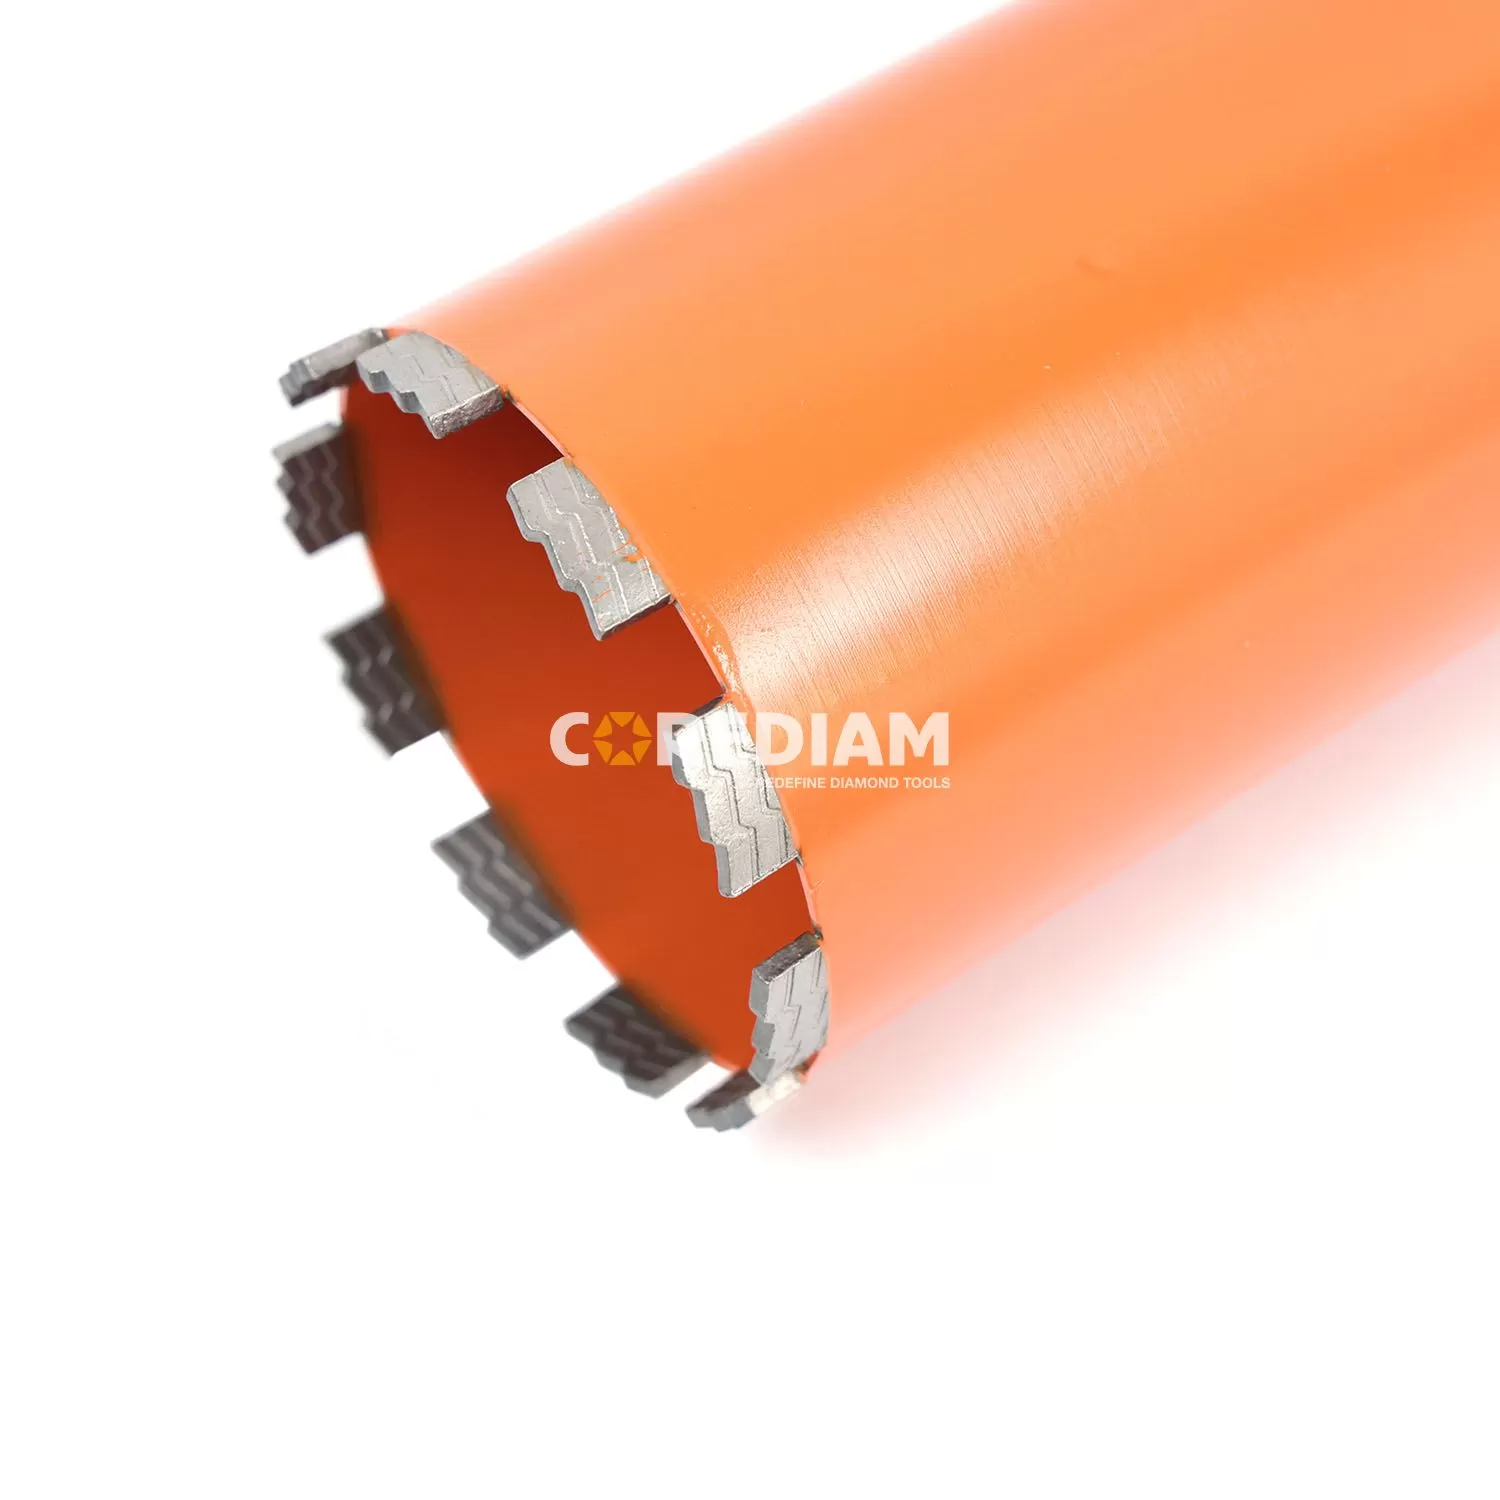 Lightning Segment Diamond core drill with 10mm segment height